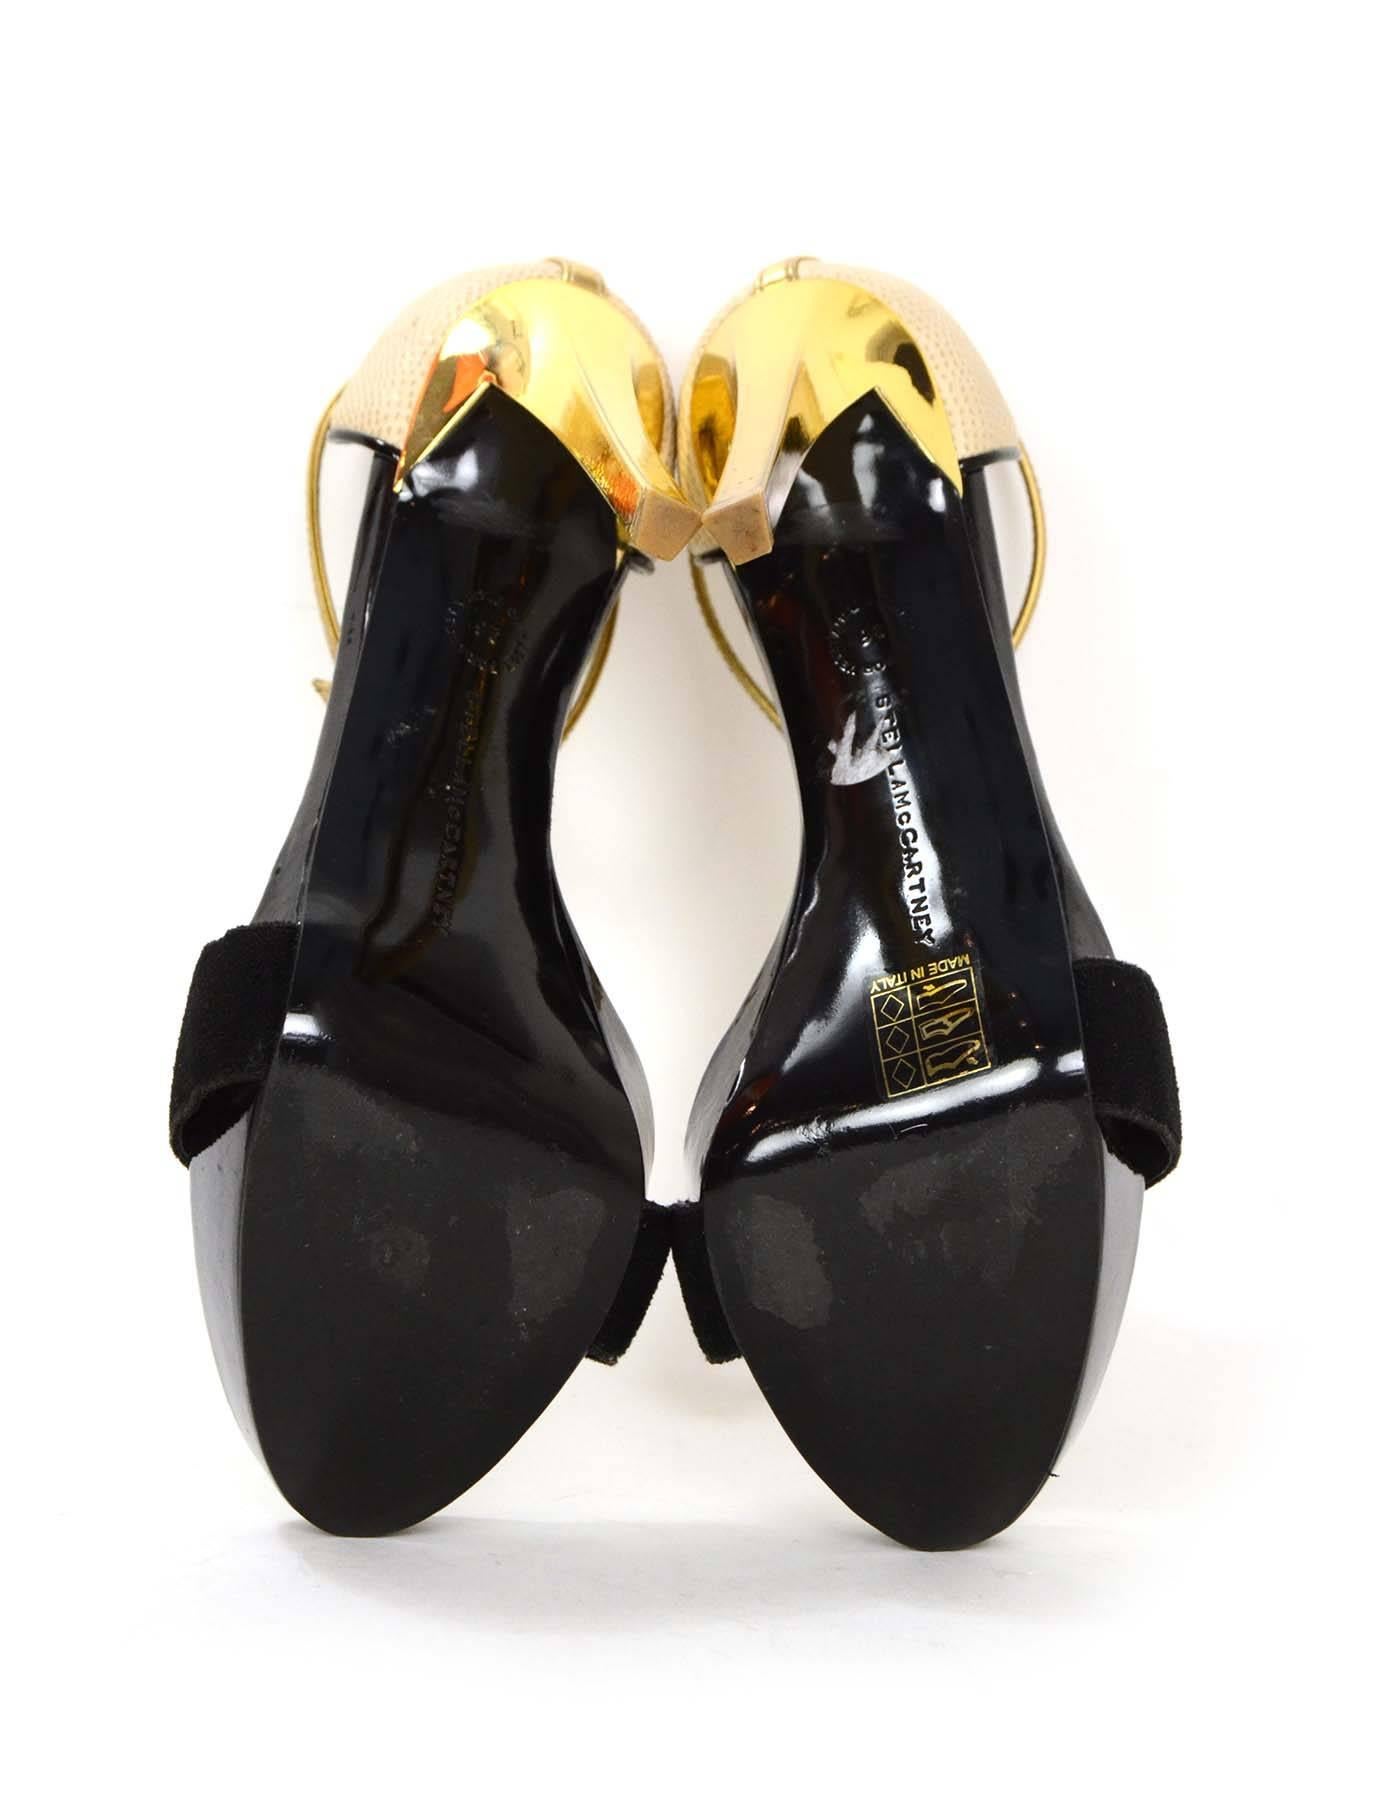 Stella McCartney Black & Gold Platform Sandals sz 36 3